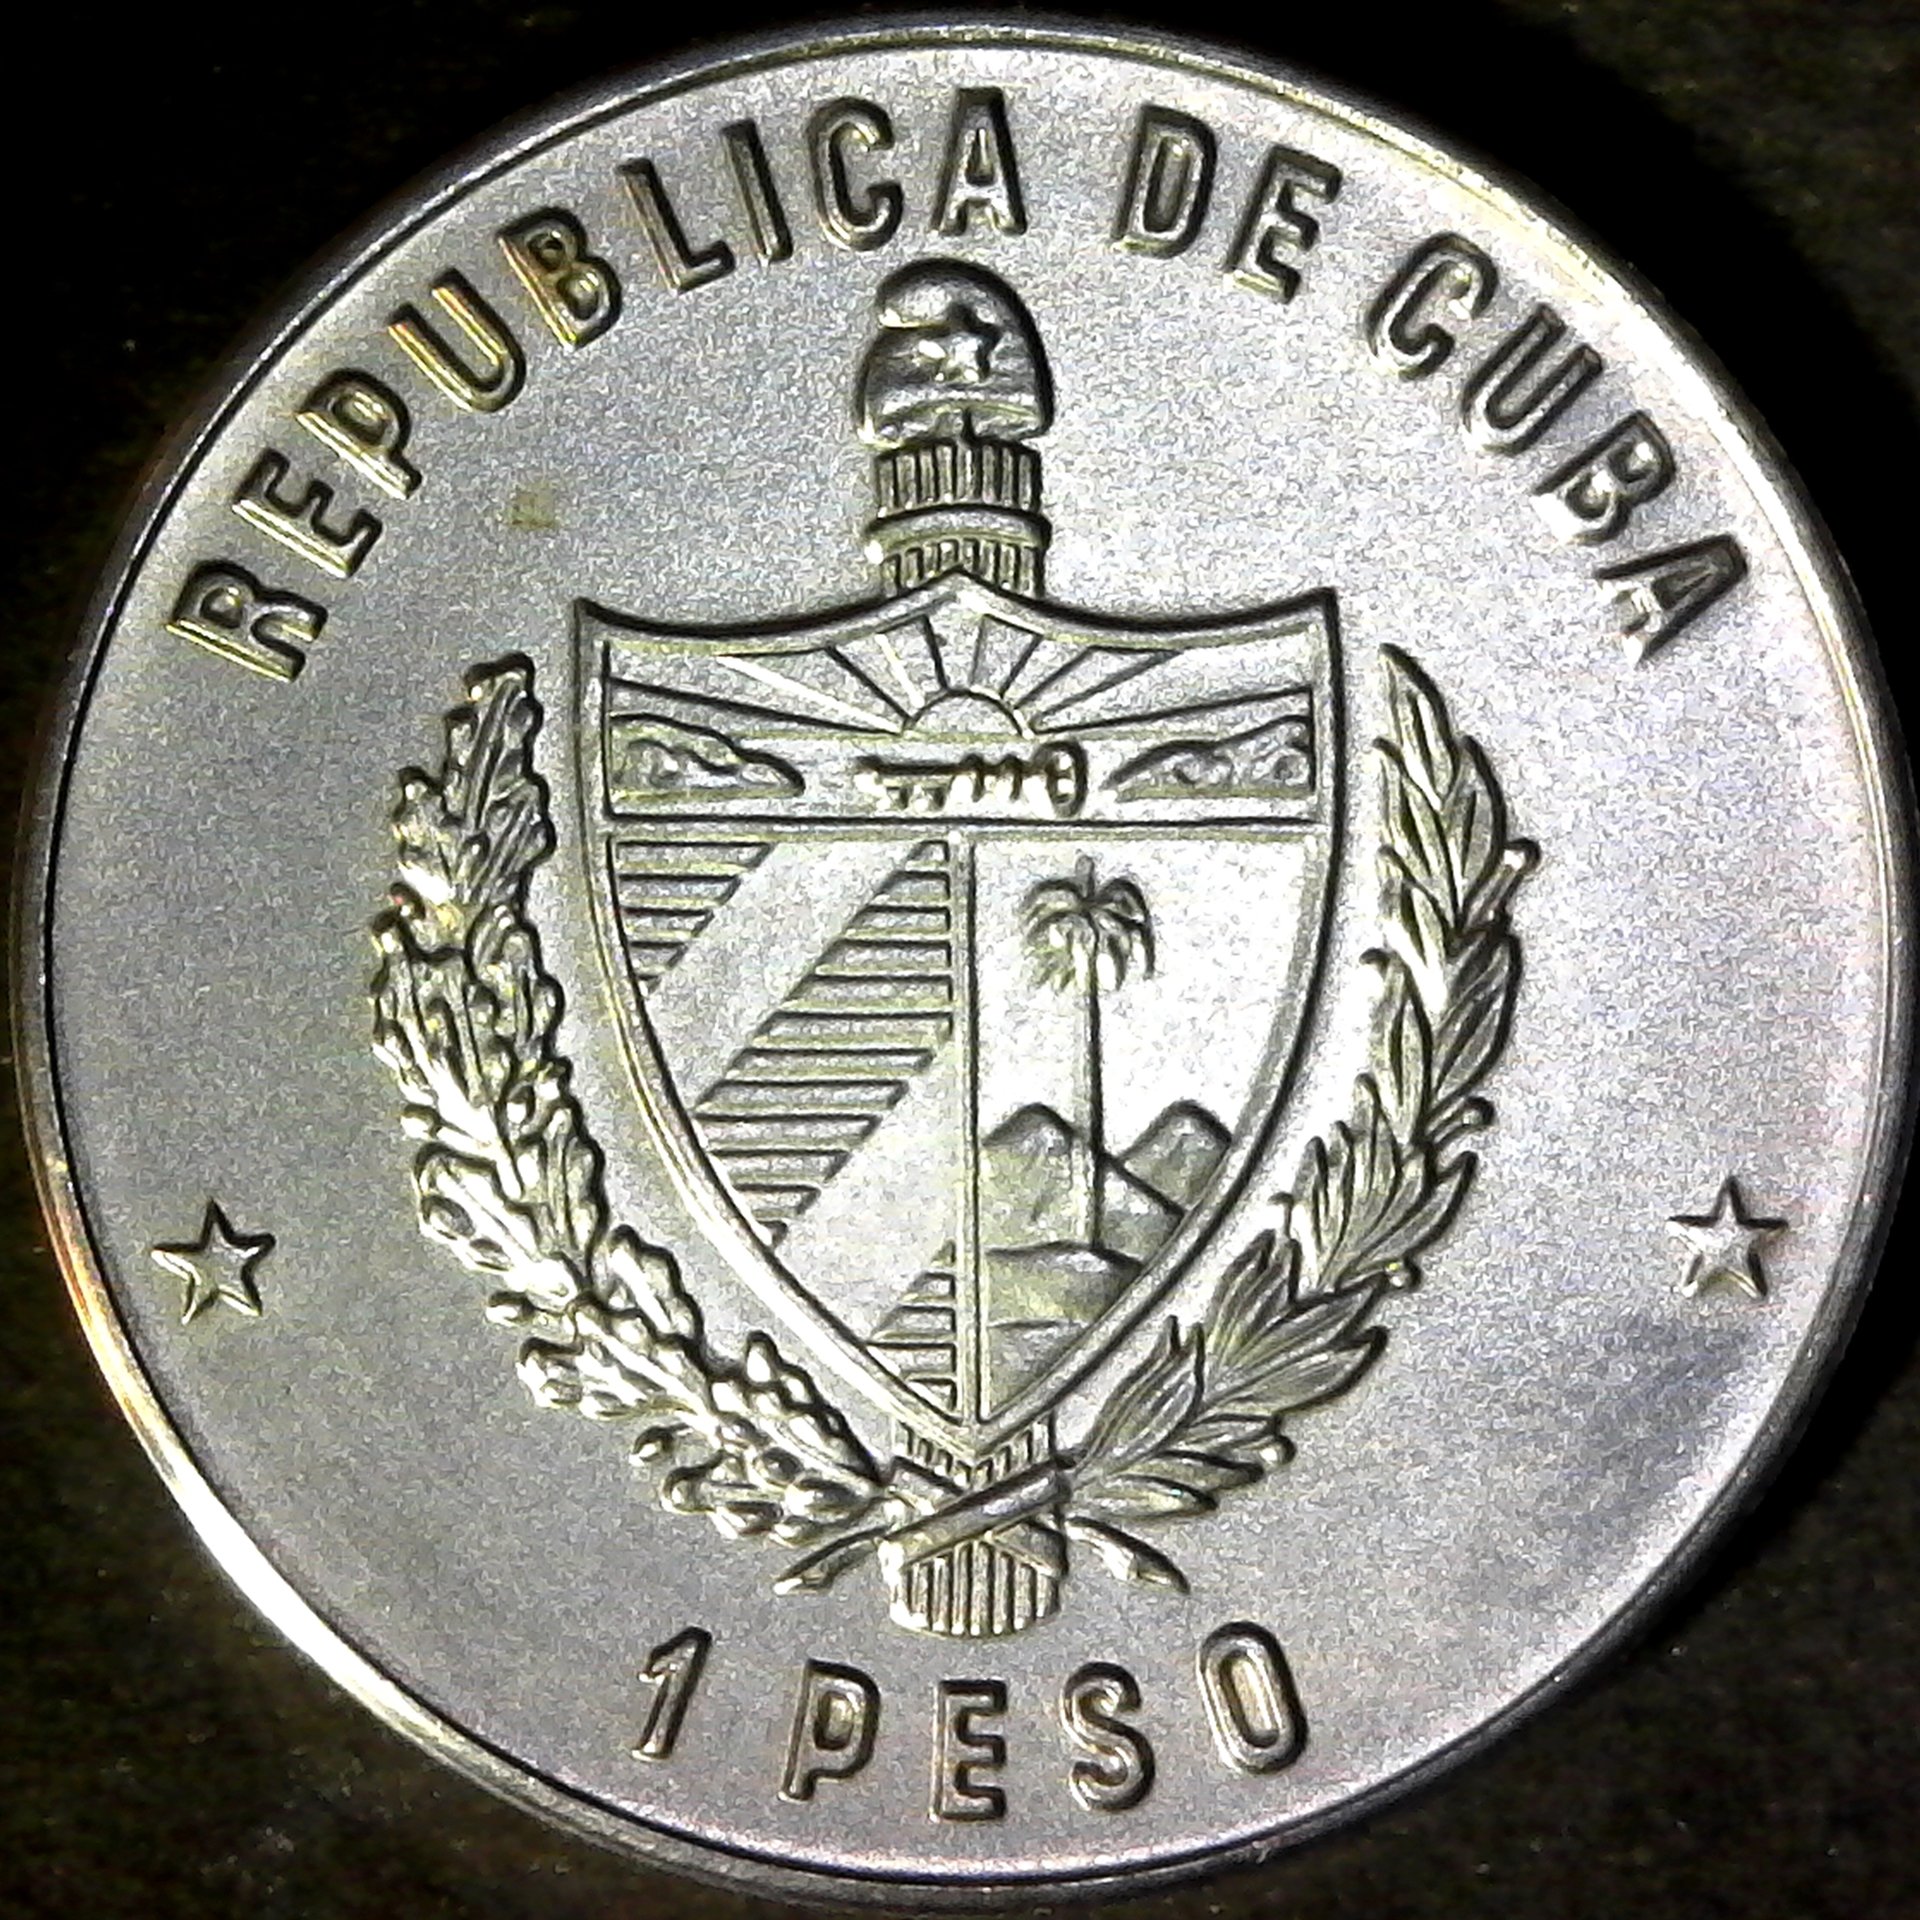 Cuba 1 Peso 1986 La Paz obv.jpg